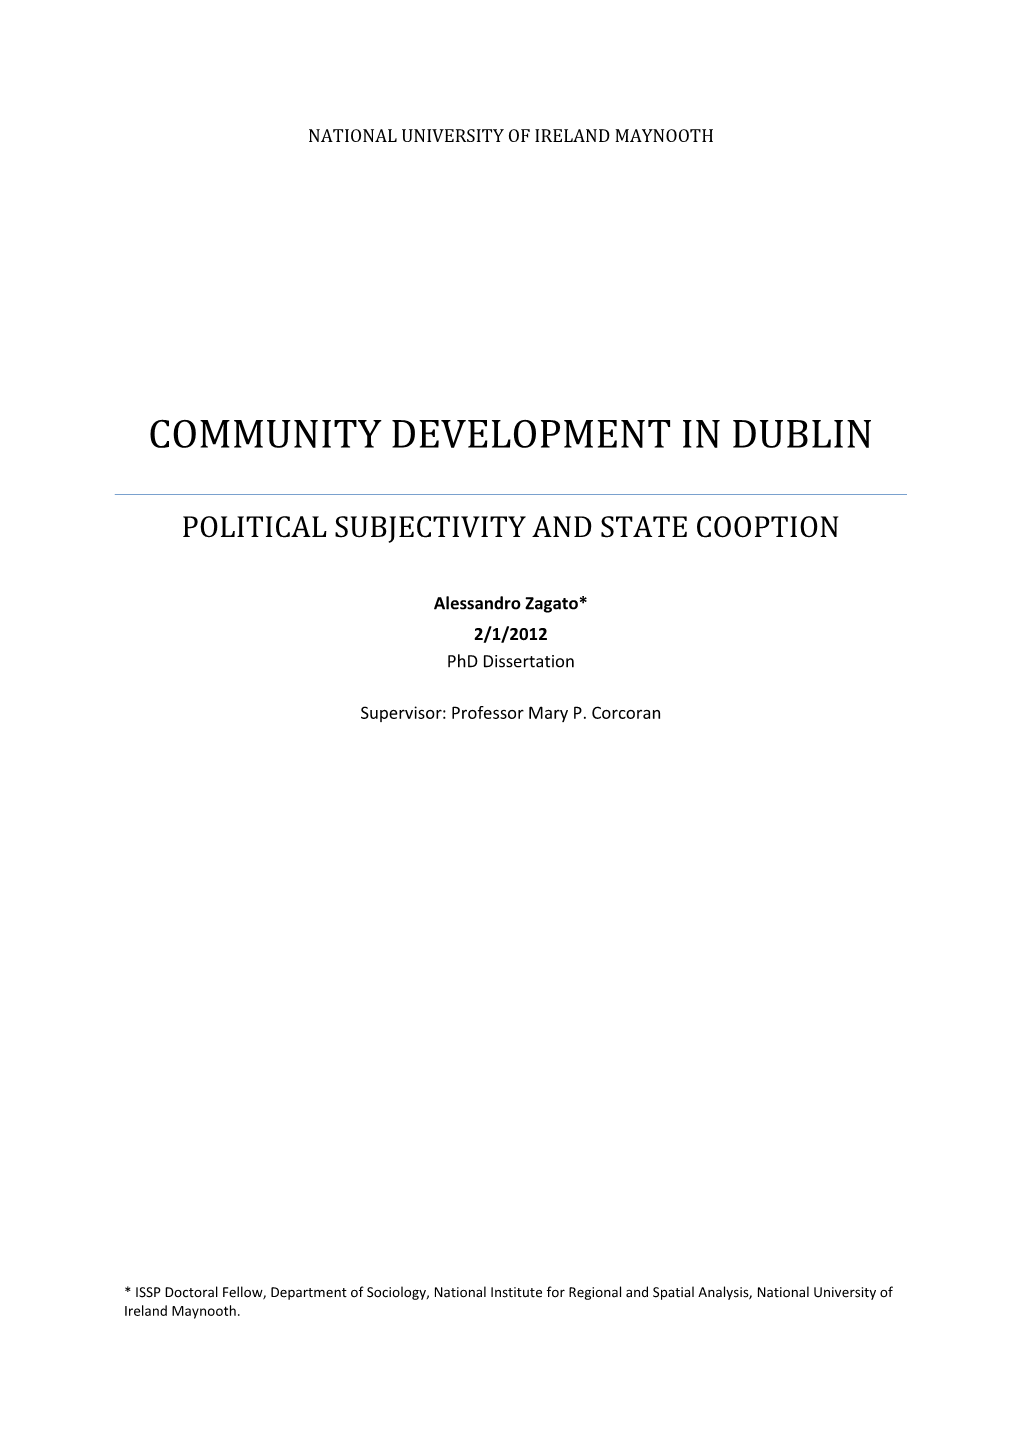 Community Development in Dublin